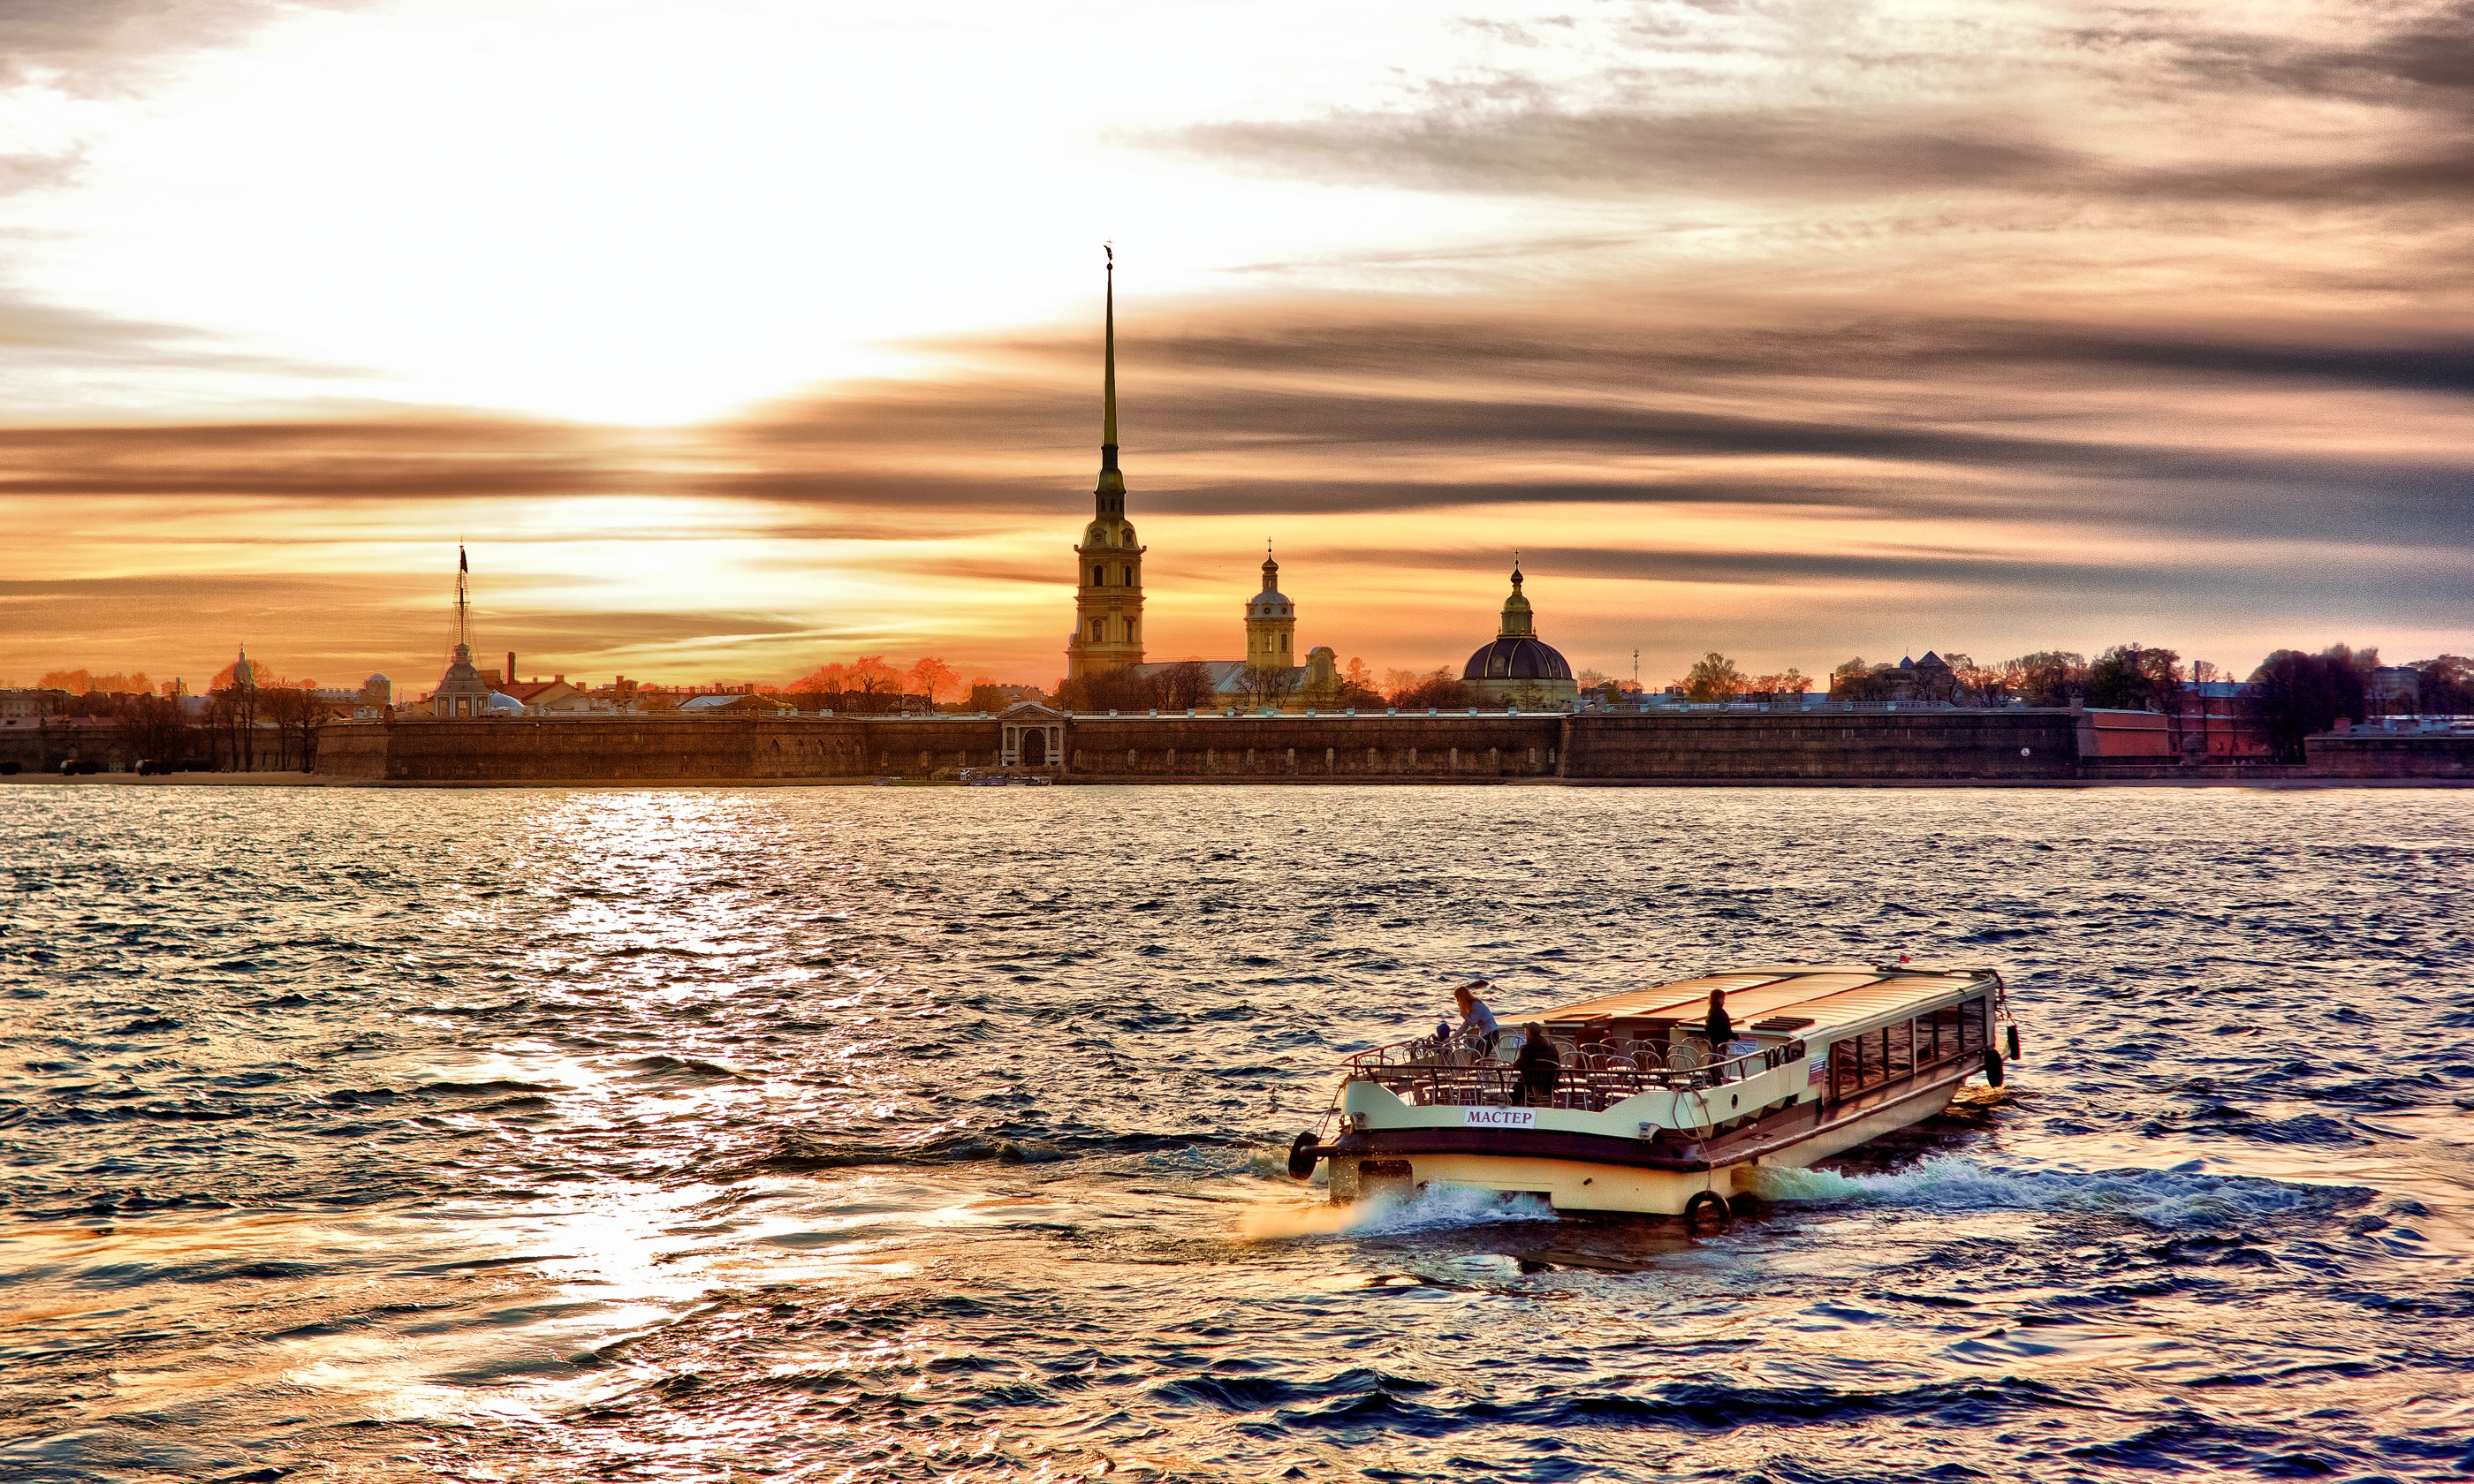 Sunset over St Petersburg (Shutterstock.com. See main credit below)